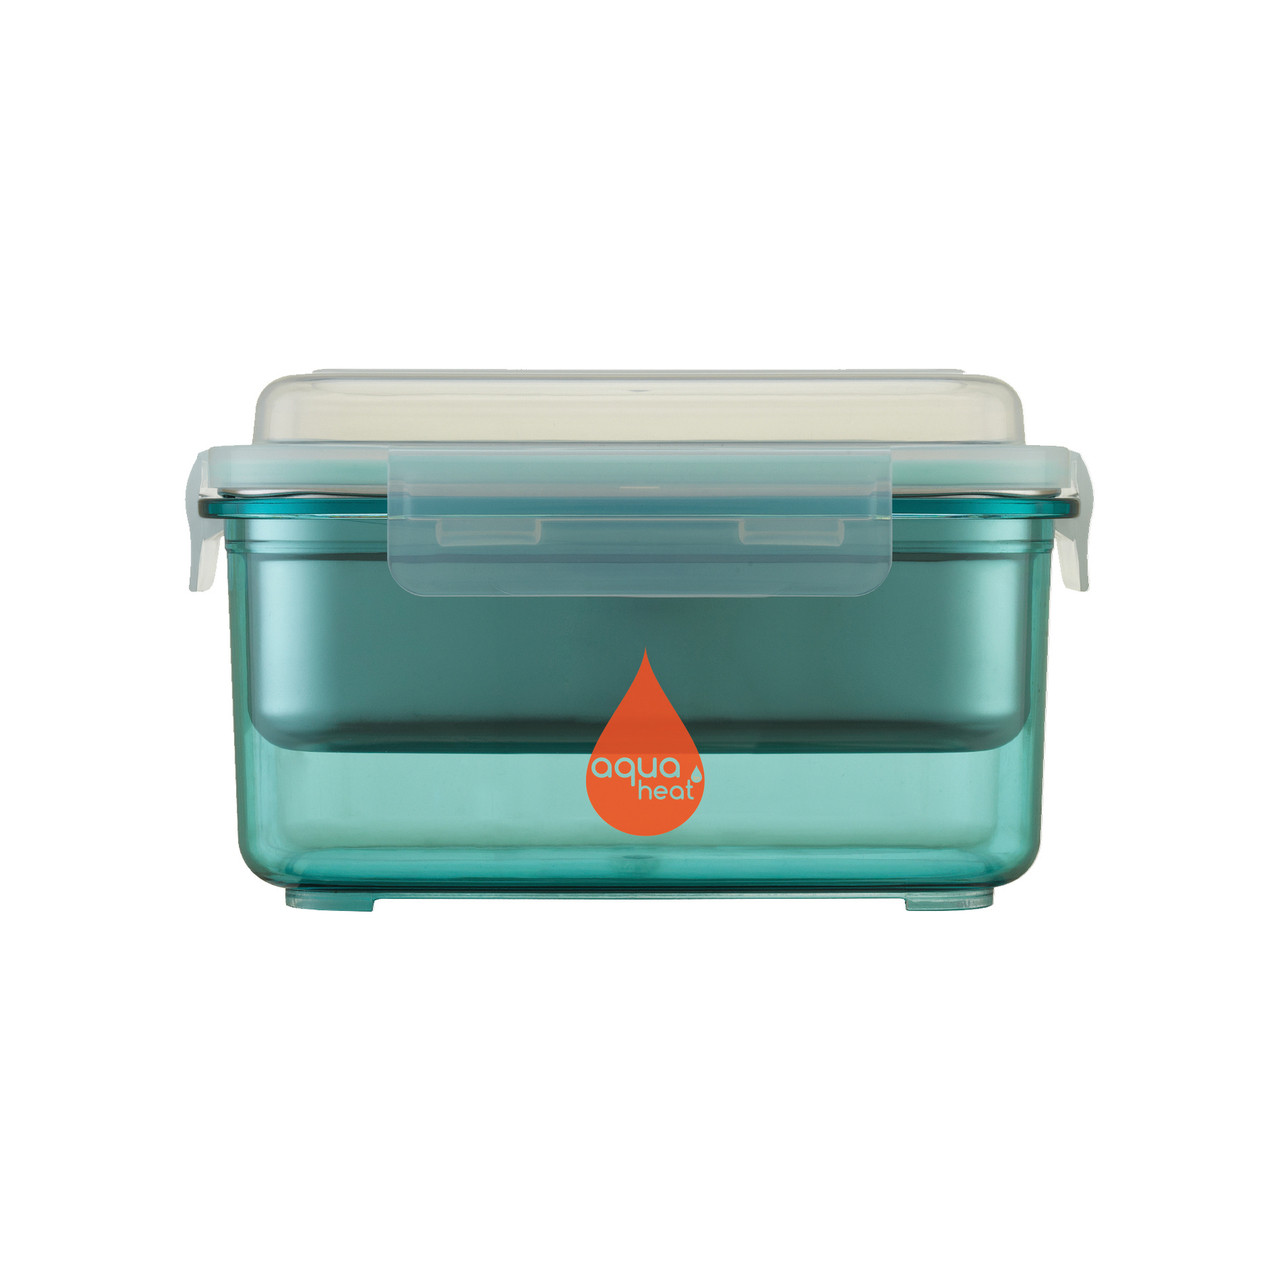 Aquaheat Portable Mega Food Warmer - Innobaby